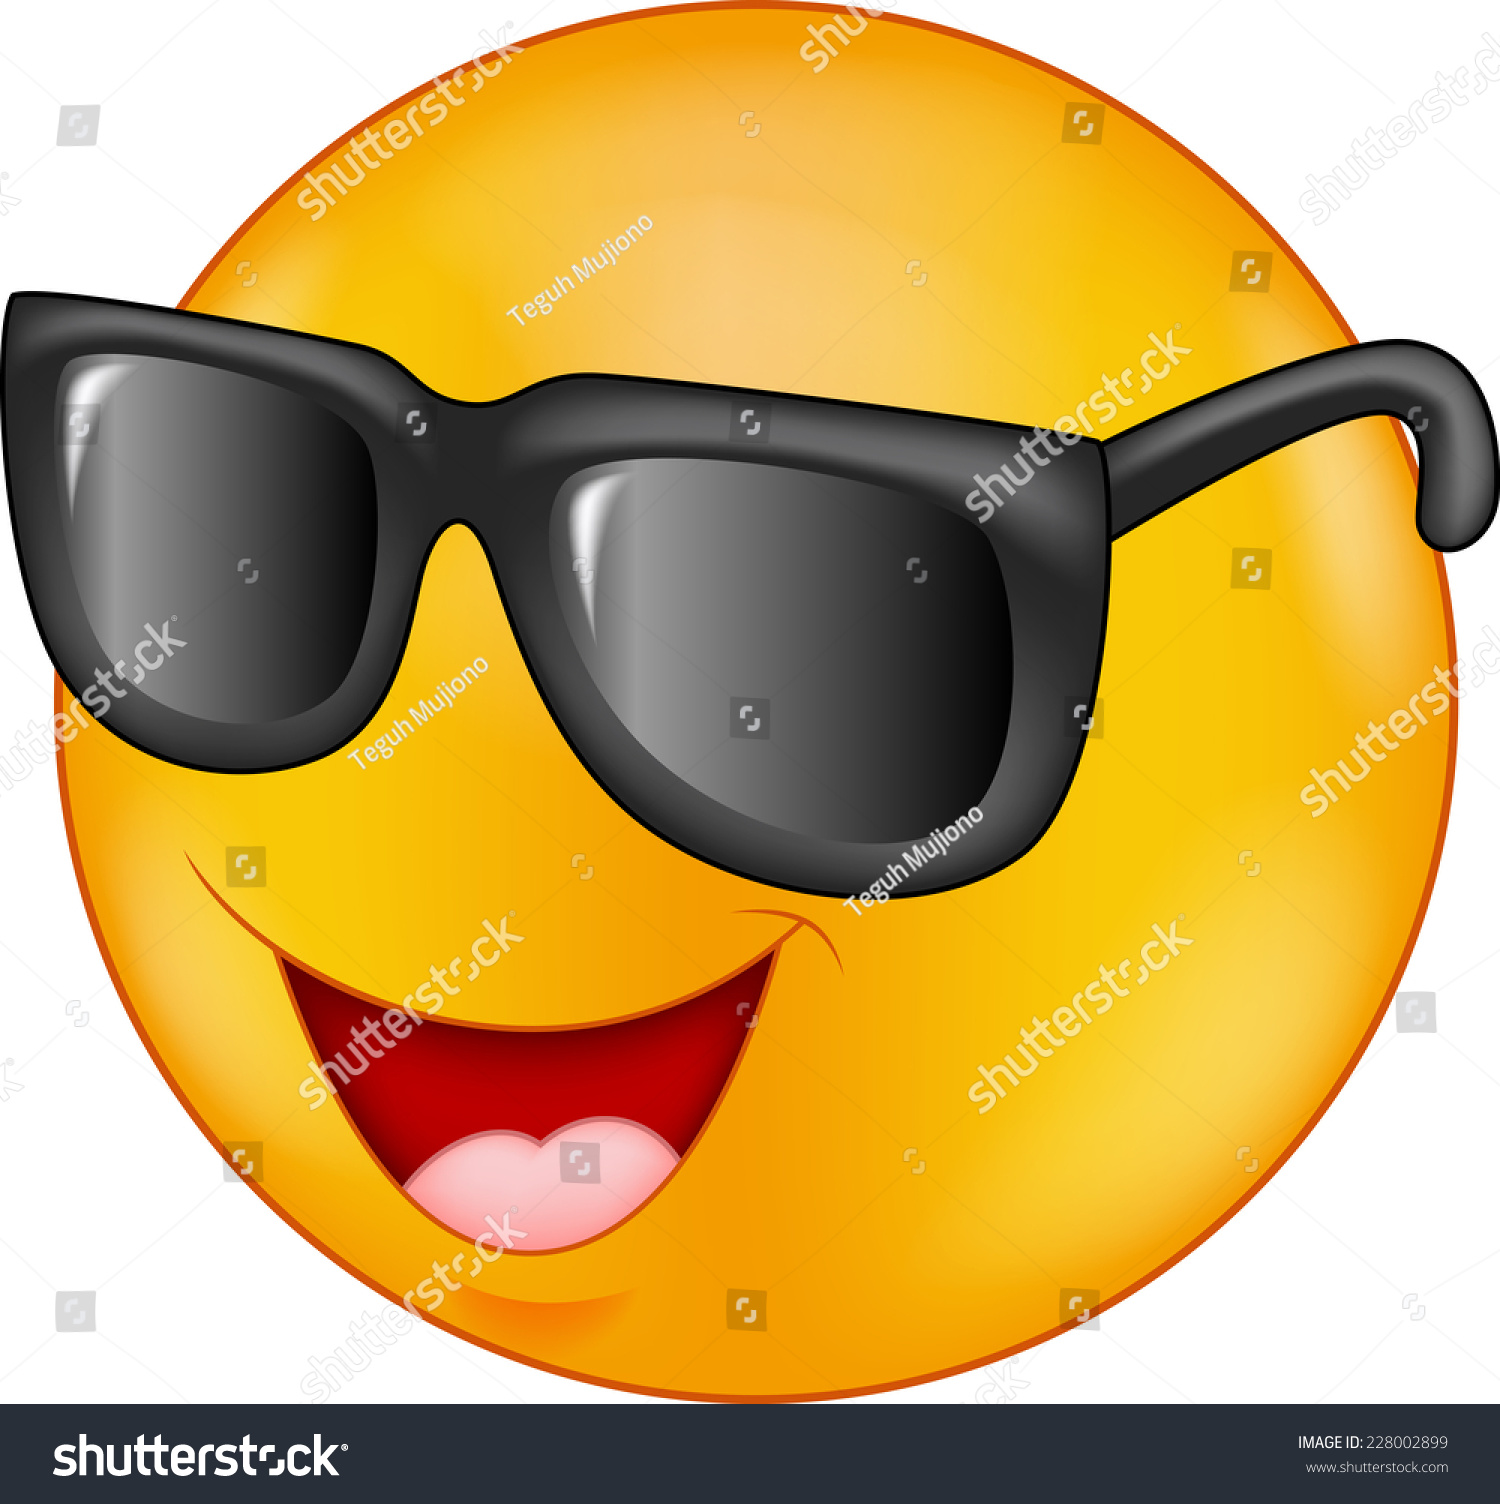 Smiling Emoticon Wearing Sunglasses Stock Vector Illustration 228002899 ...